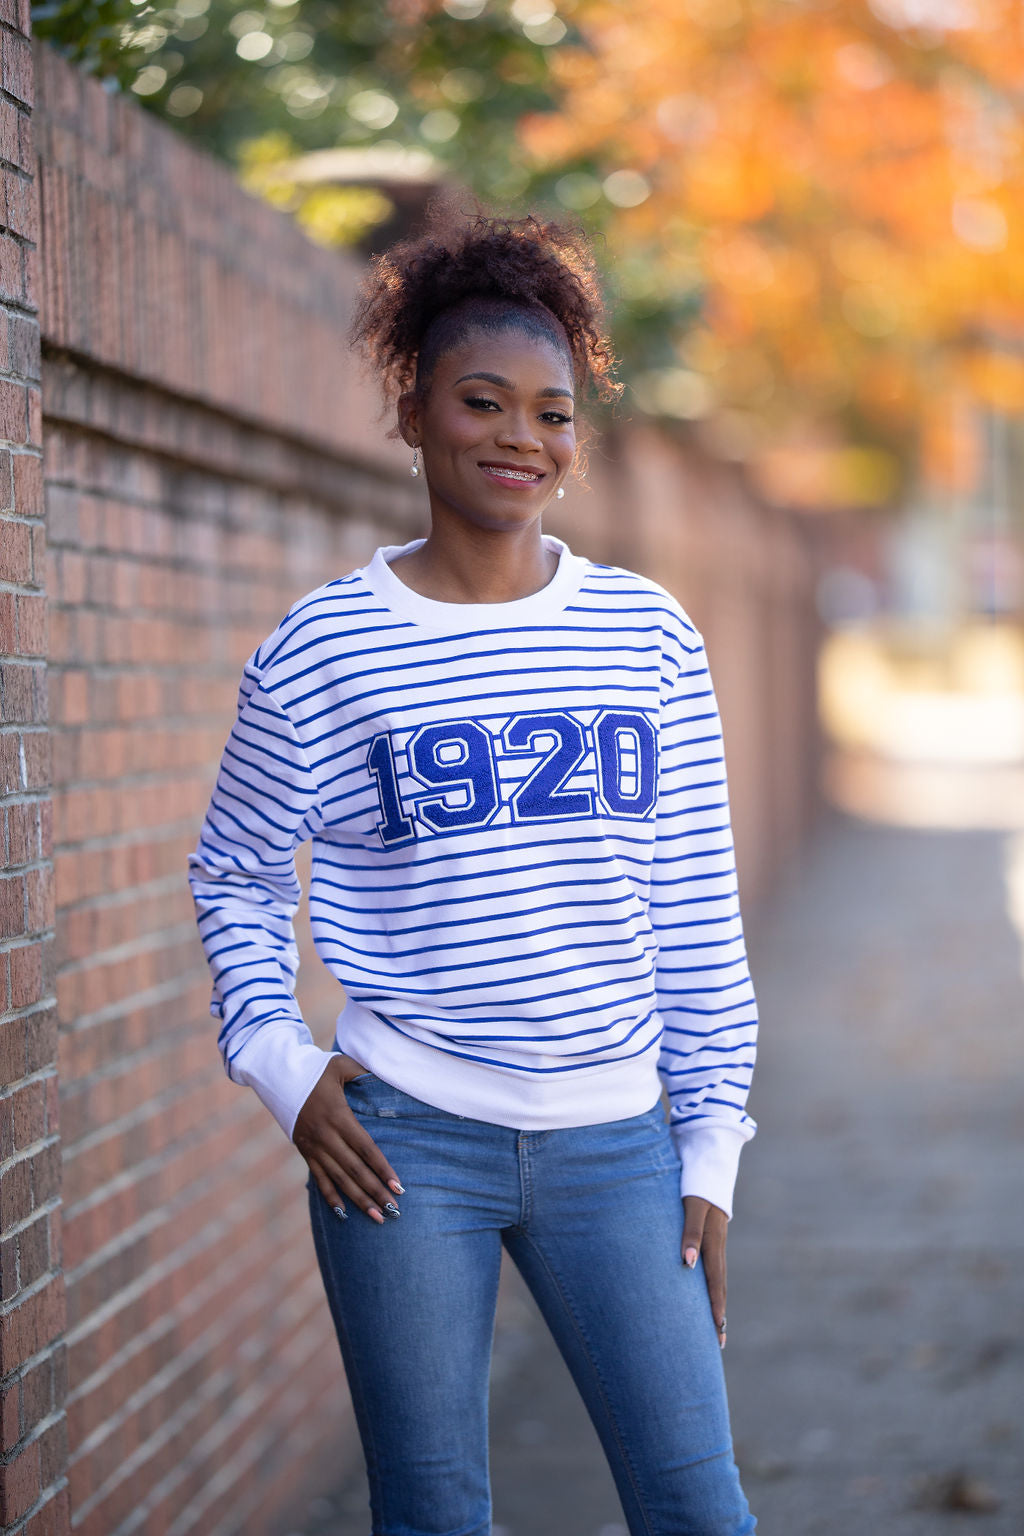 Zeta 1920 Blue & White Striped Sweatshirt Unisex